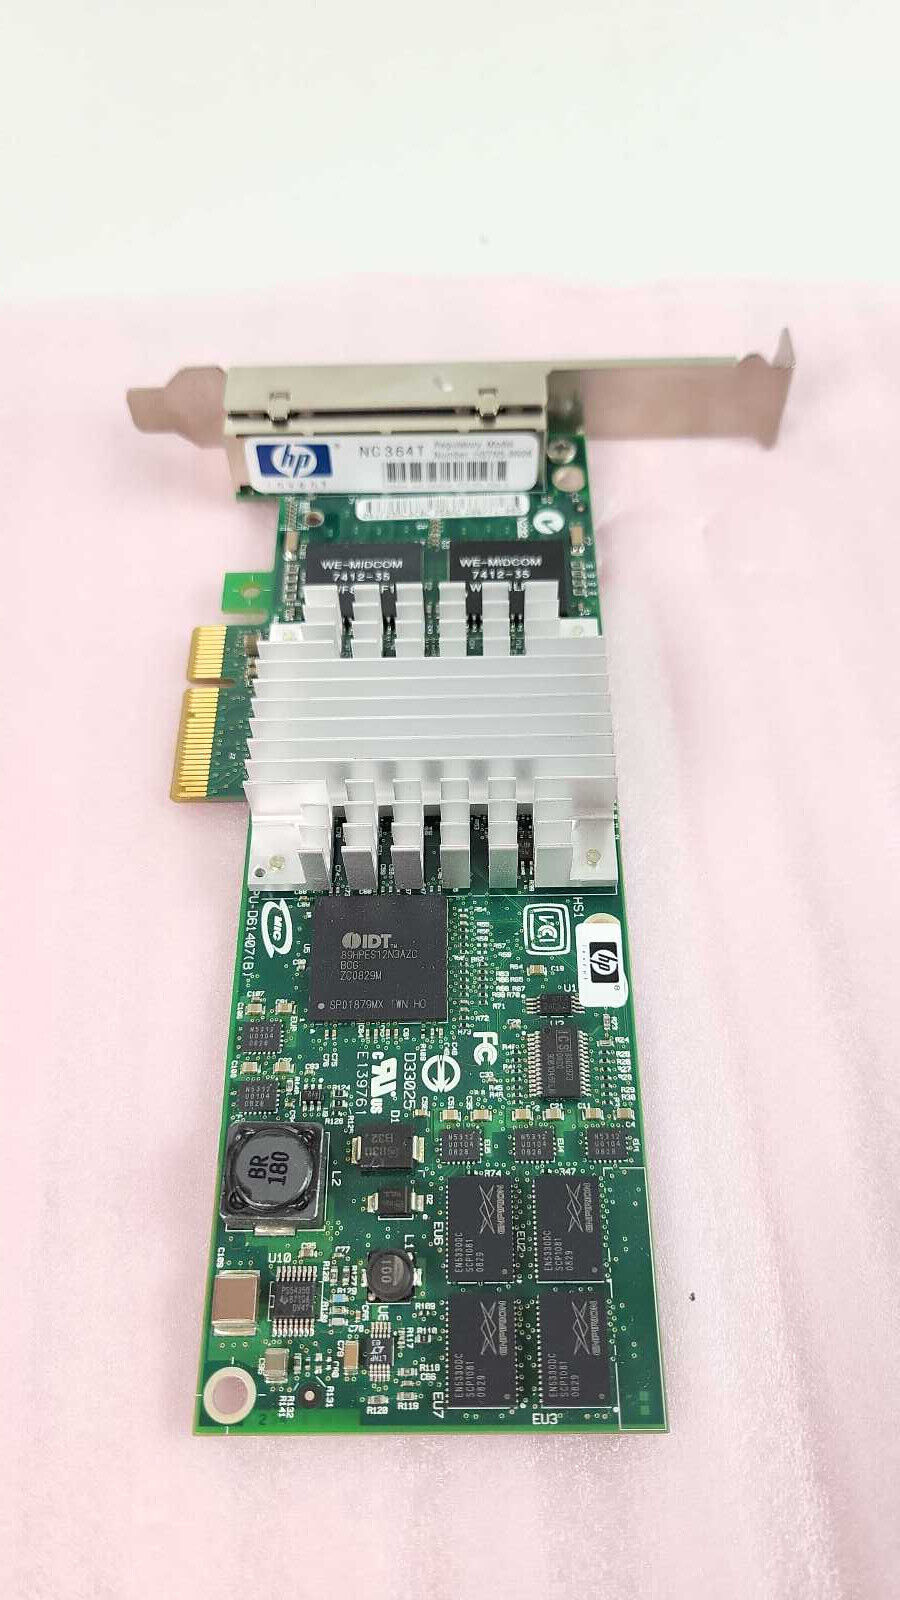 HP 435508-B21 NC364T PCI-e Quad Port Gigabit Server Adapter